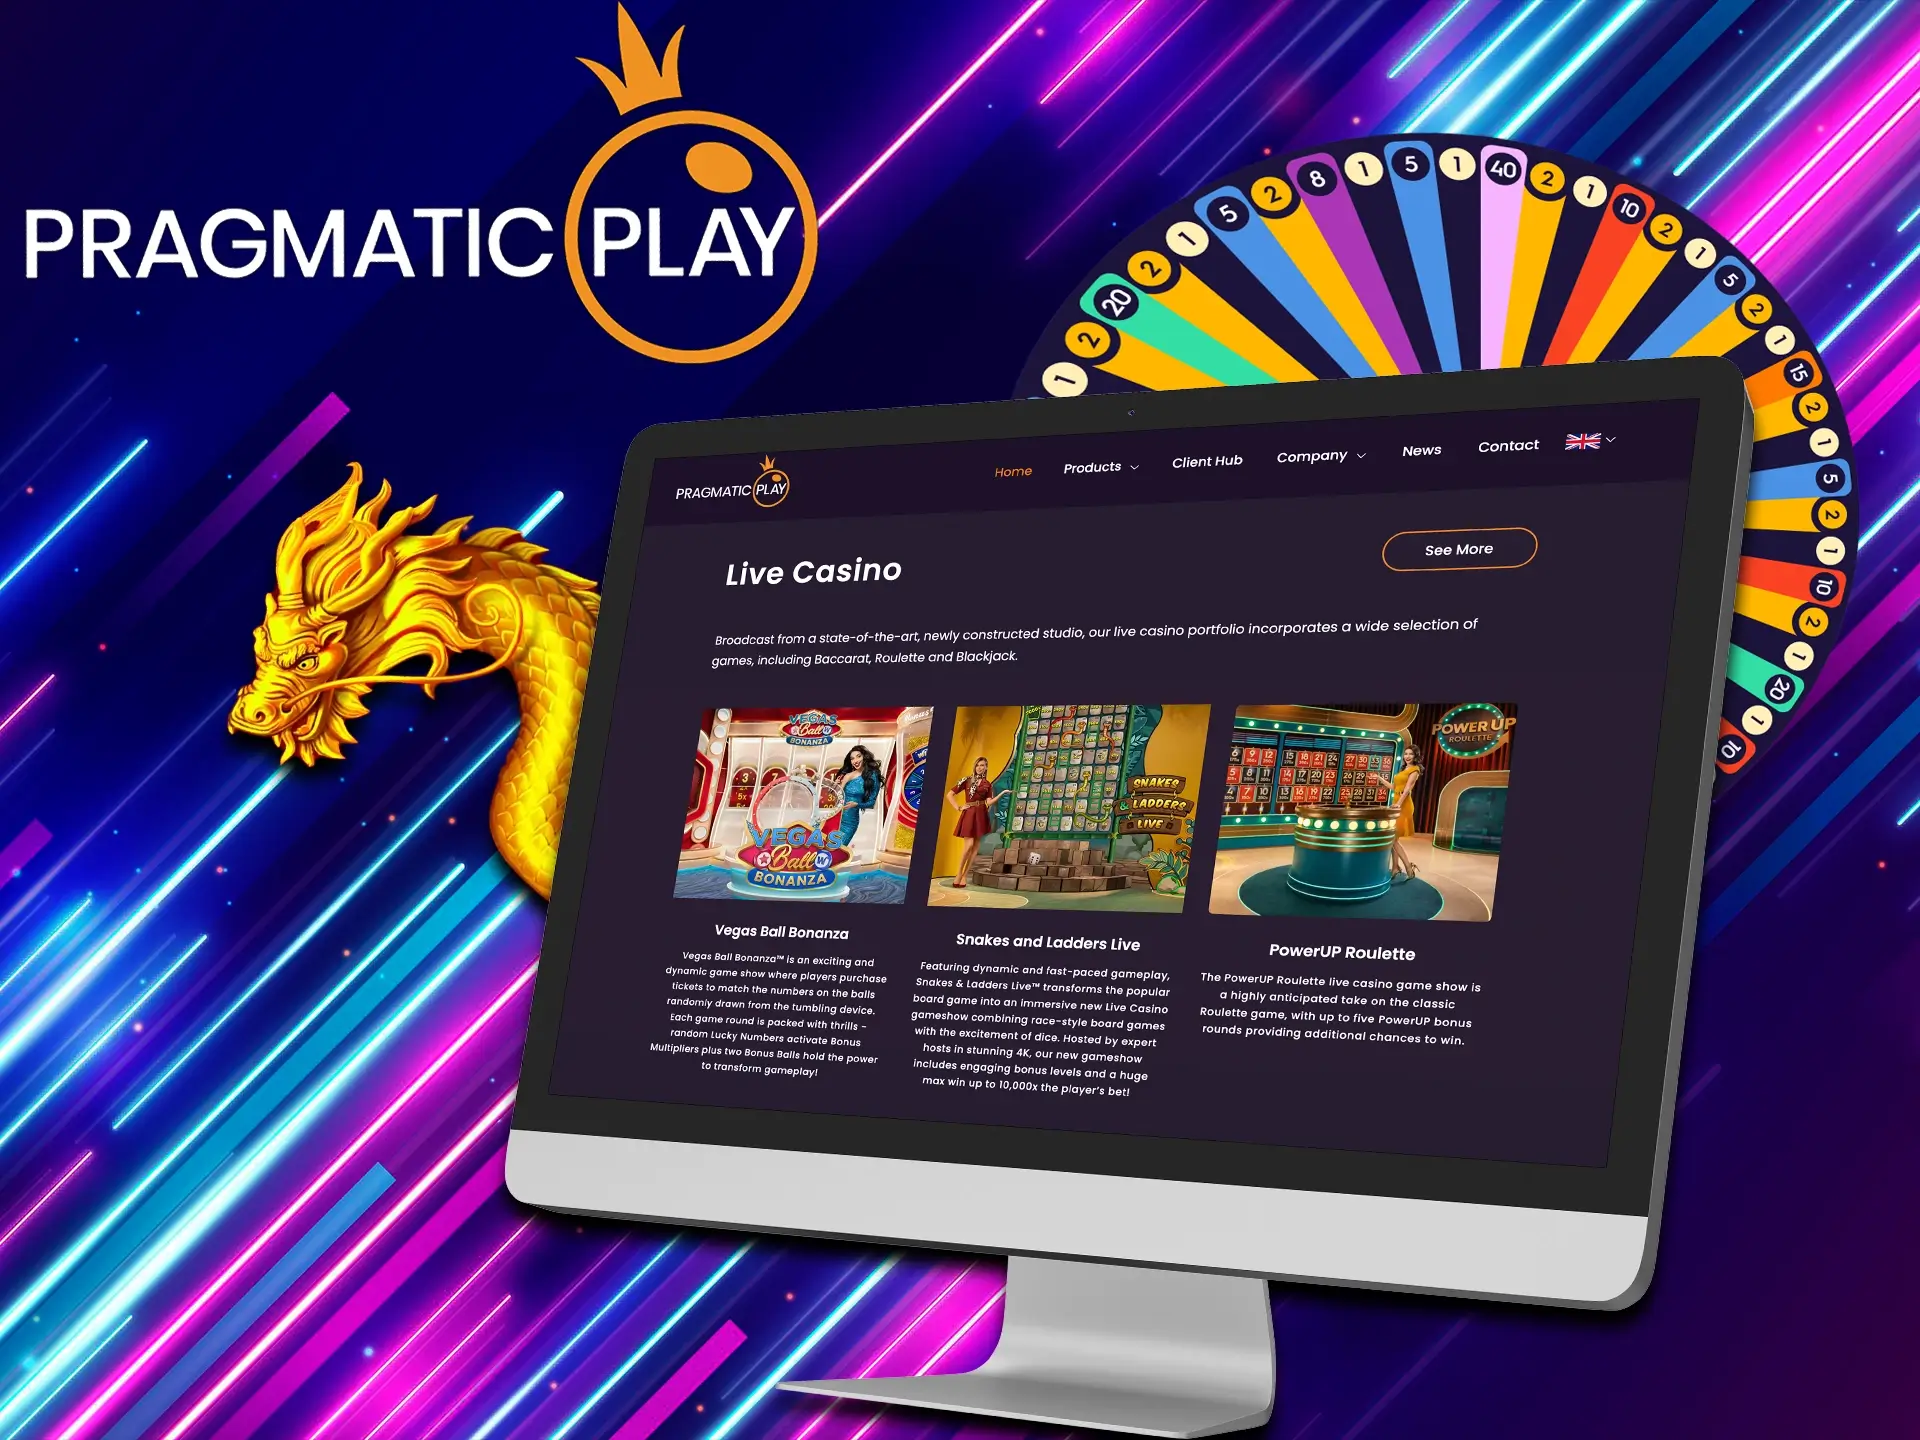 Try online casino from Pragmatic Play.